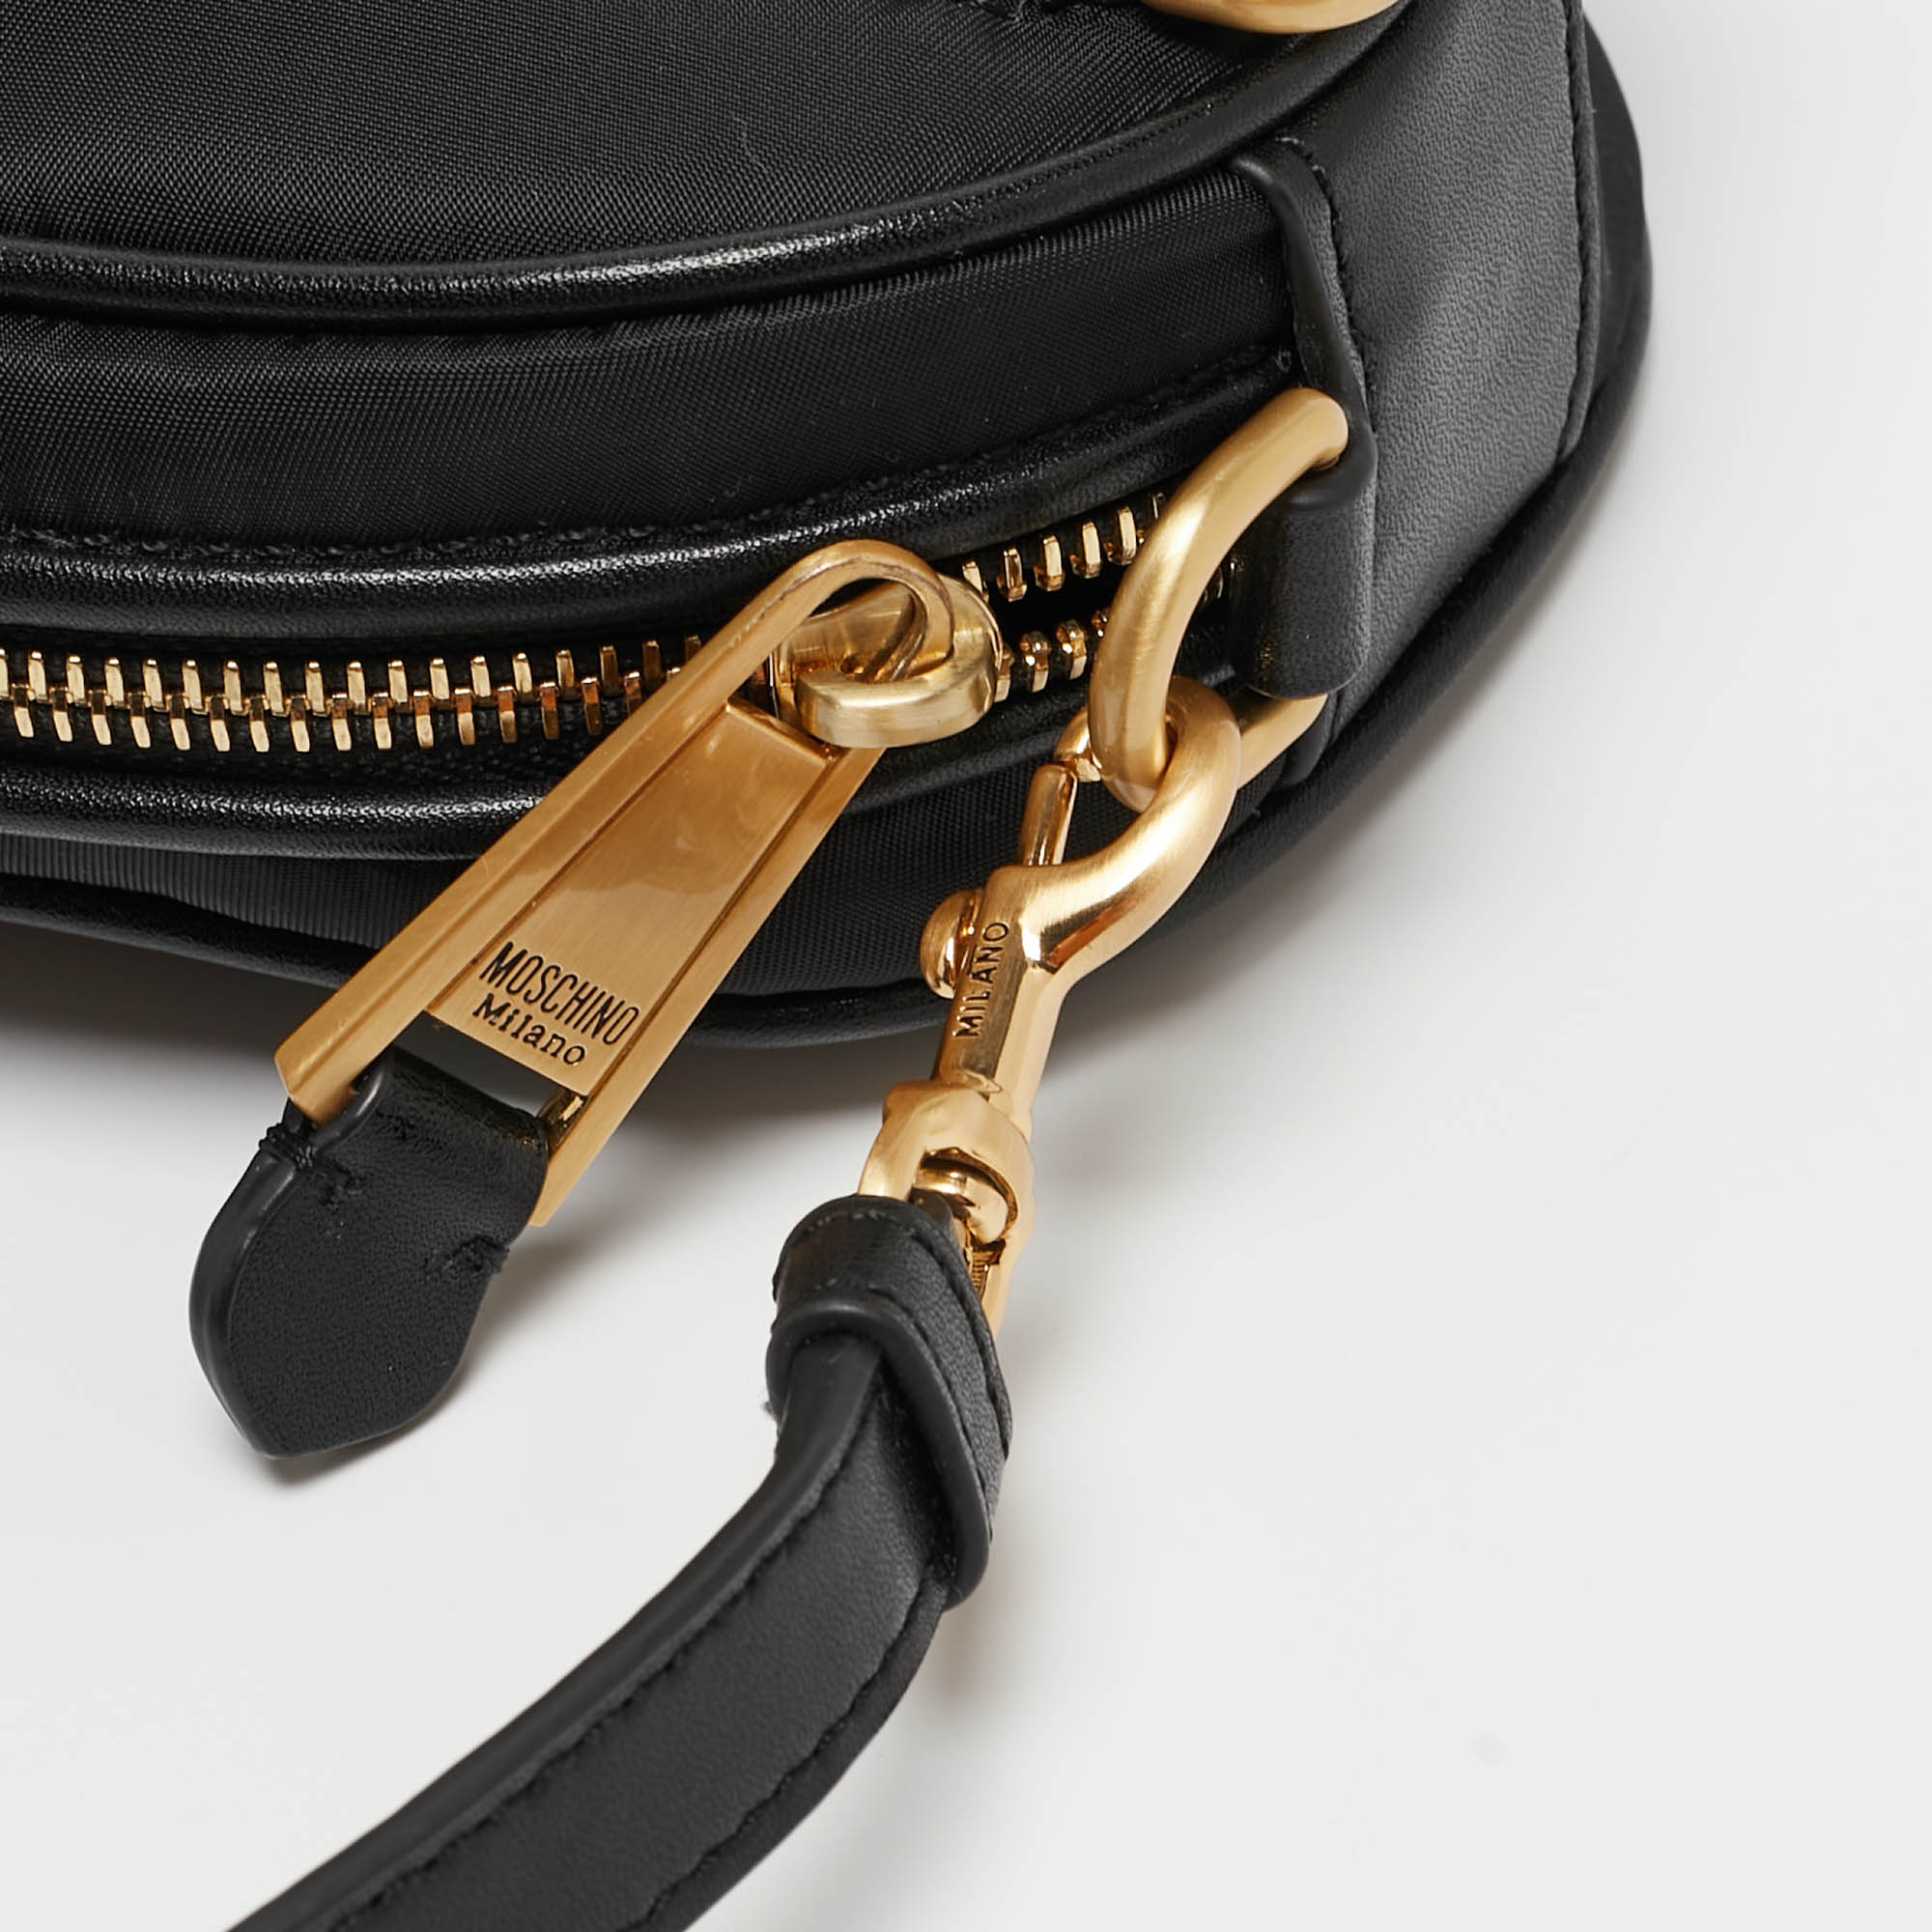 Moschino Black Nylon And Leather Belt Bag